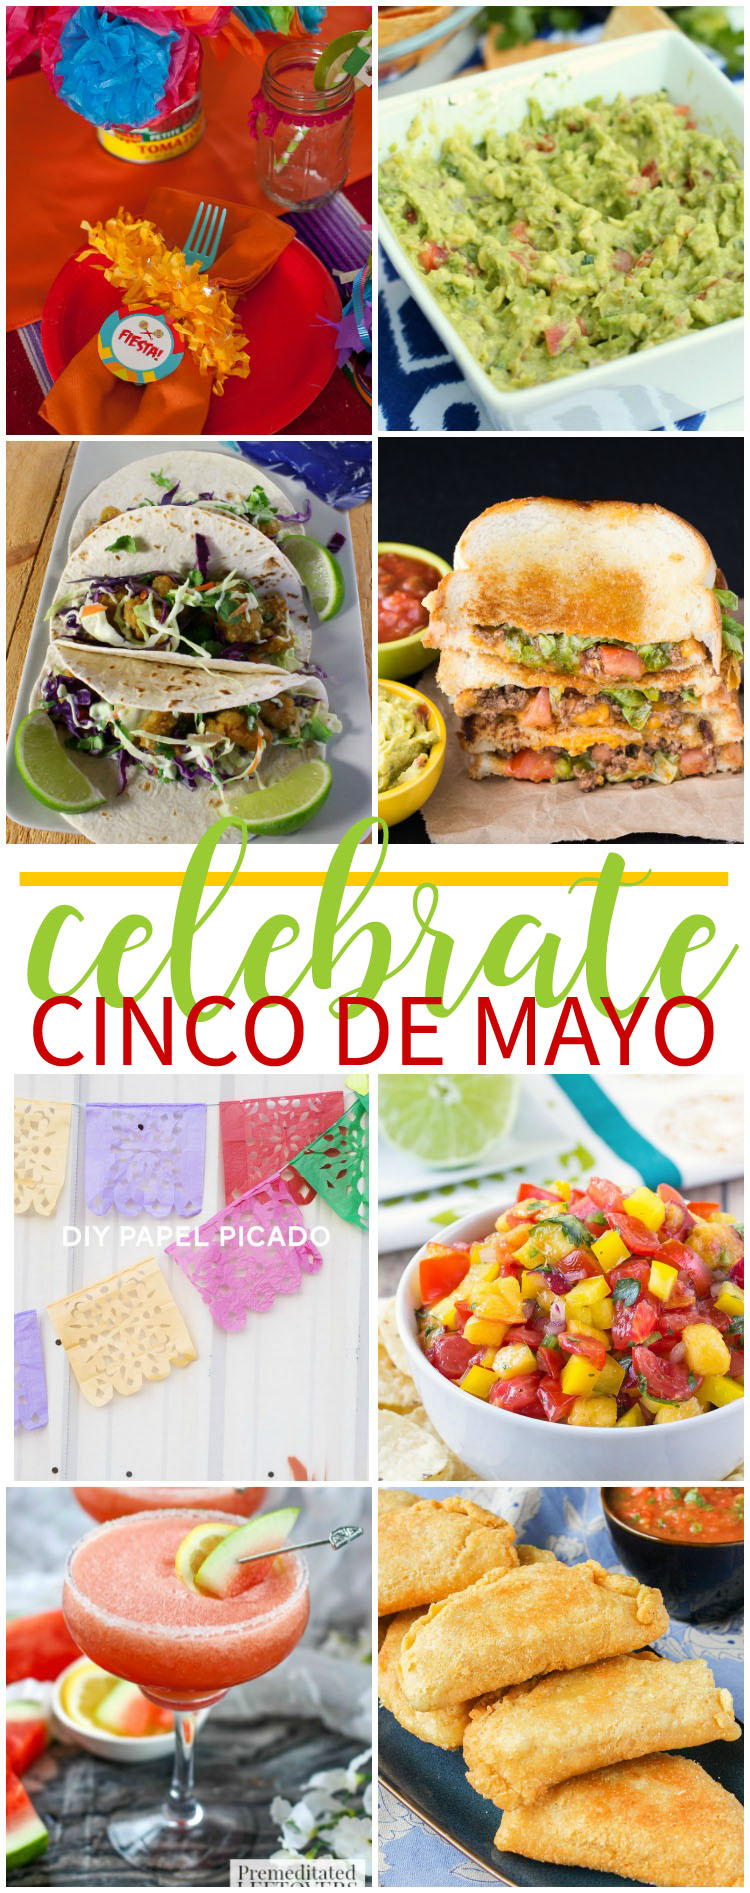 8 Great Ways to Celebrate Cinco de Mayo